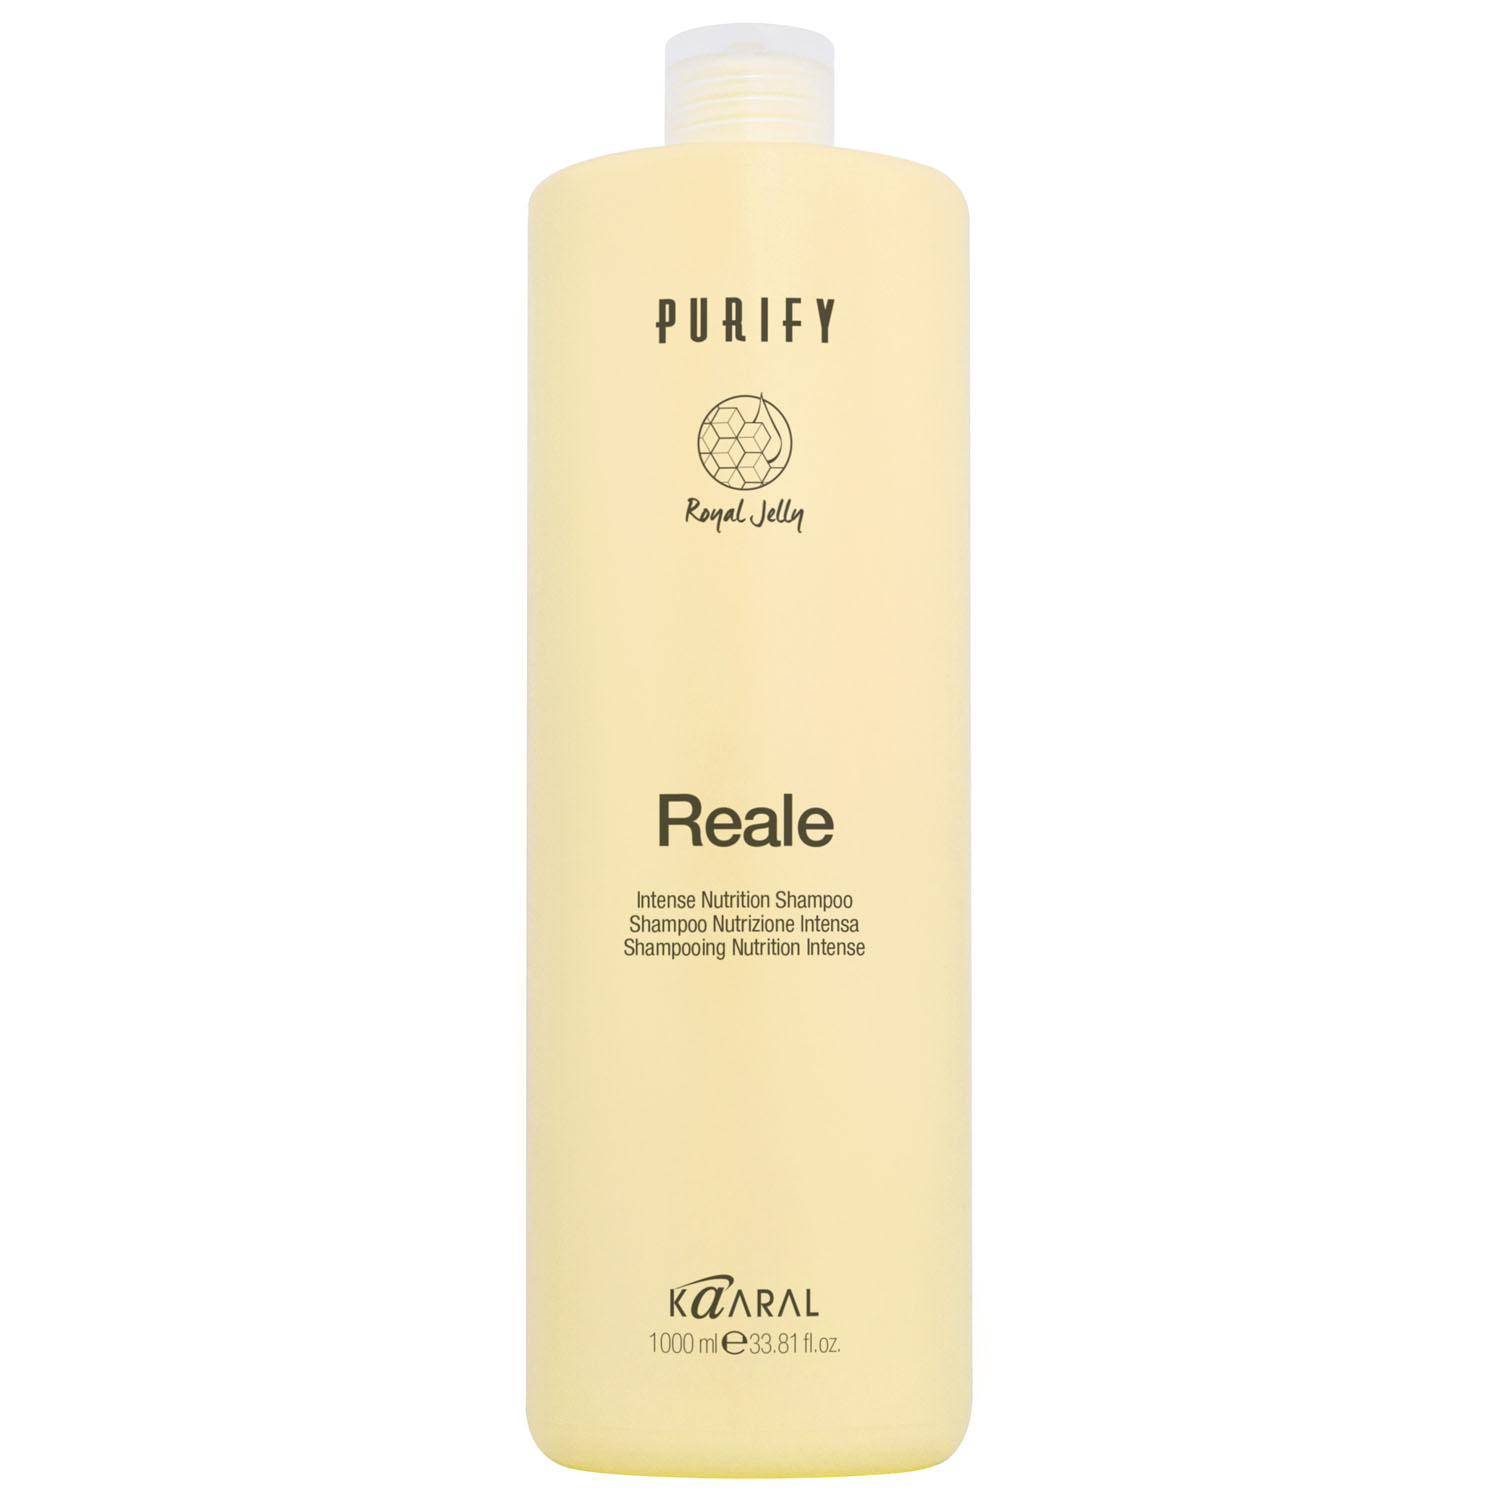 цена Kaaral Восстанавливающий шампунь для поврежденных волос Intense Nutrition Shampoo, 1000 мл (Kaaral, Purify)